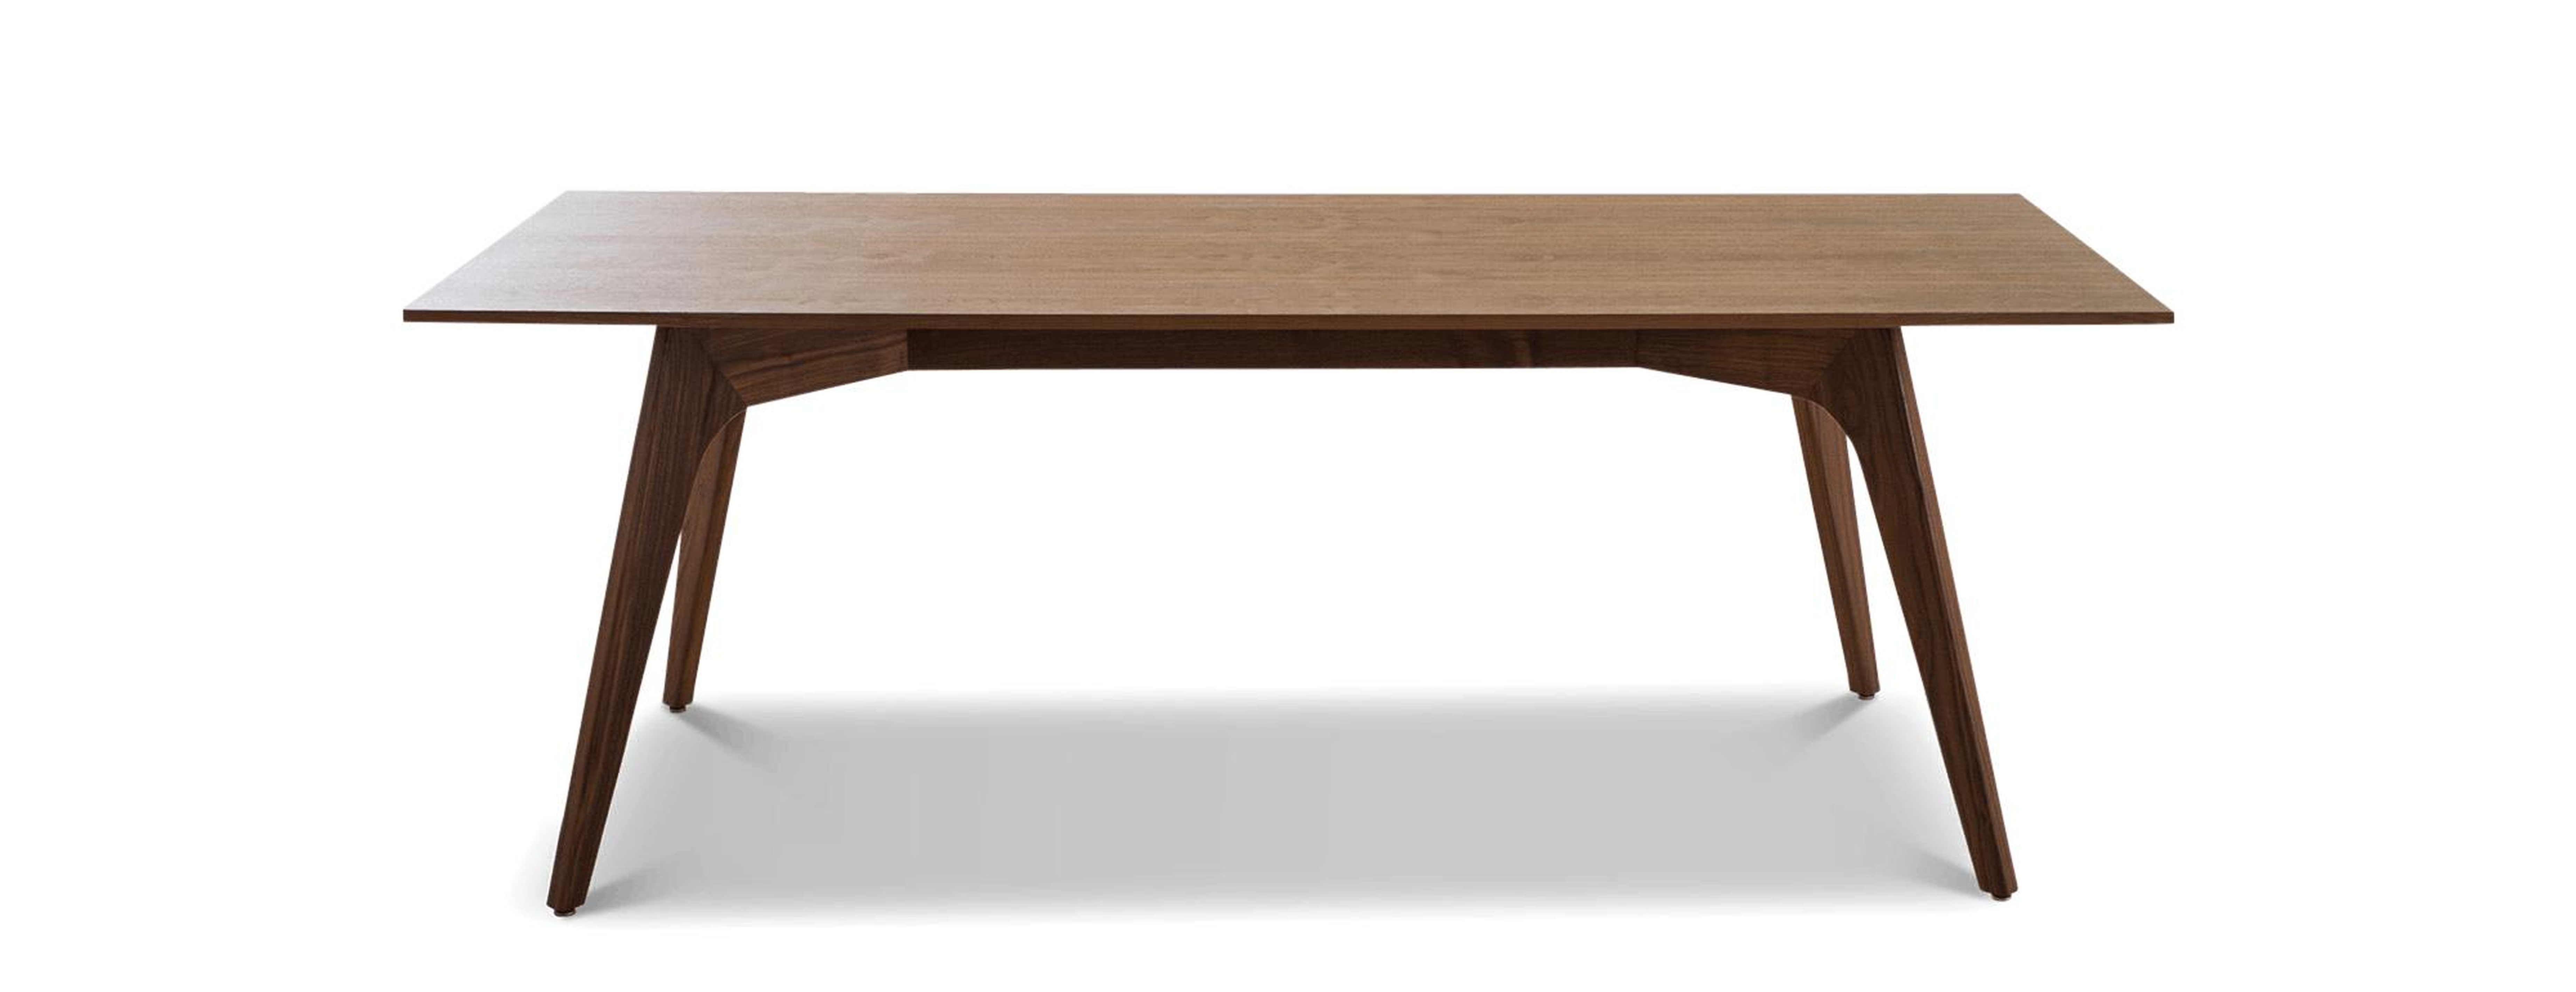 Hesse Mid Century Modern (Wood Top) Dining Table - Walnut - Joybird